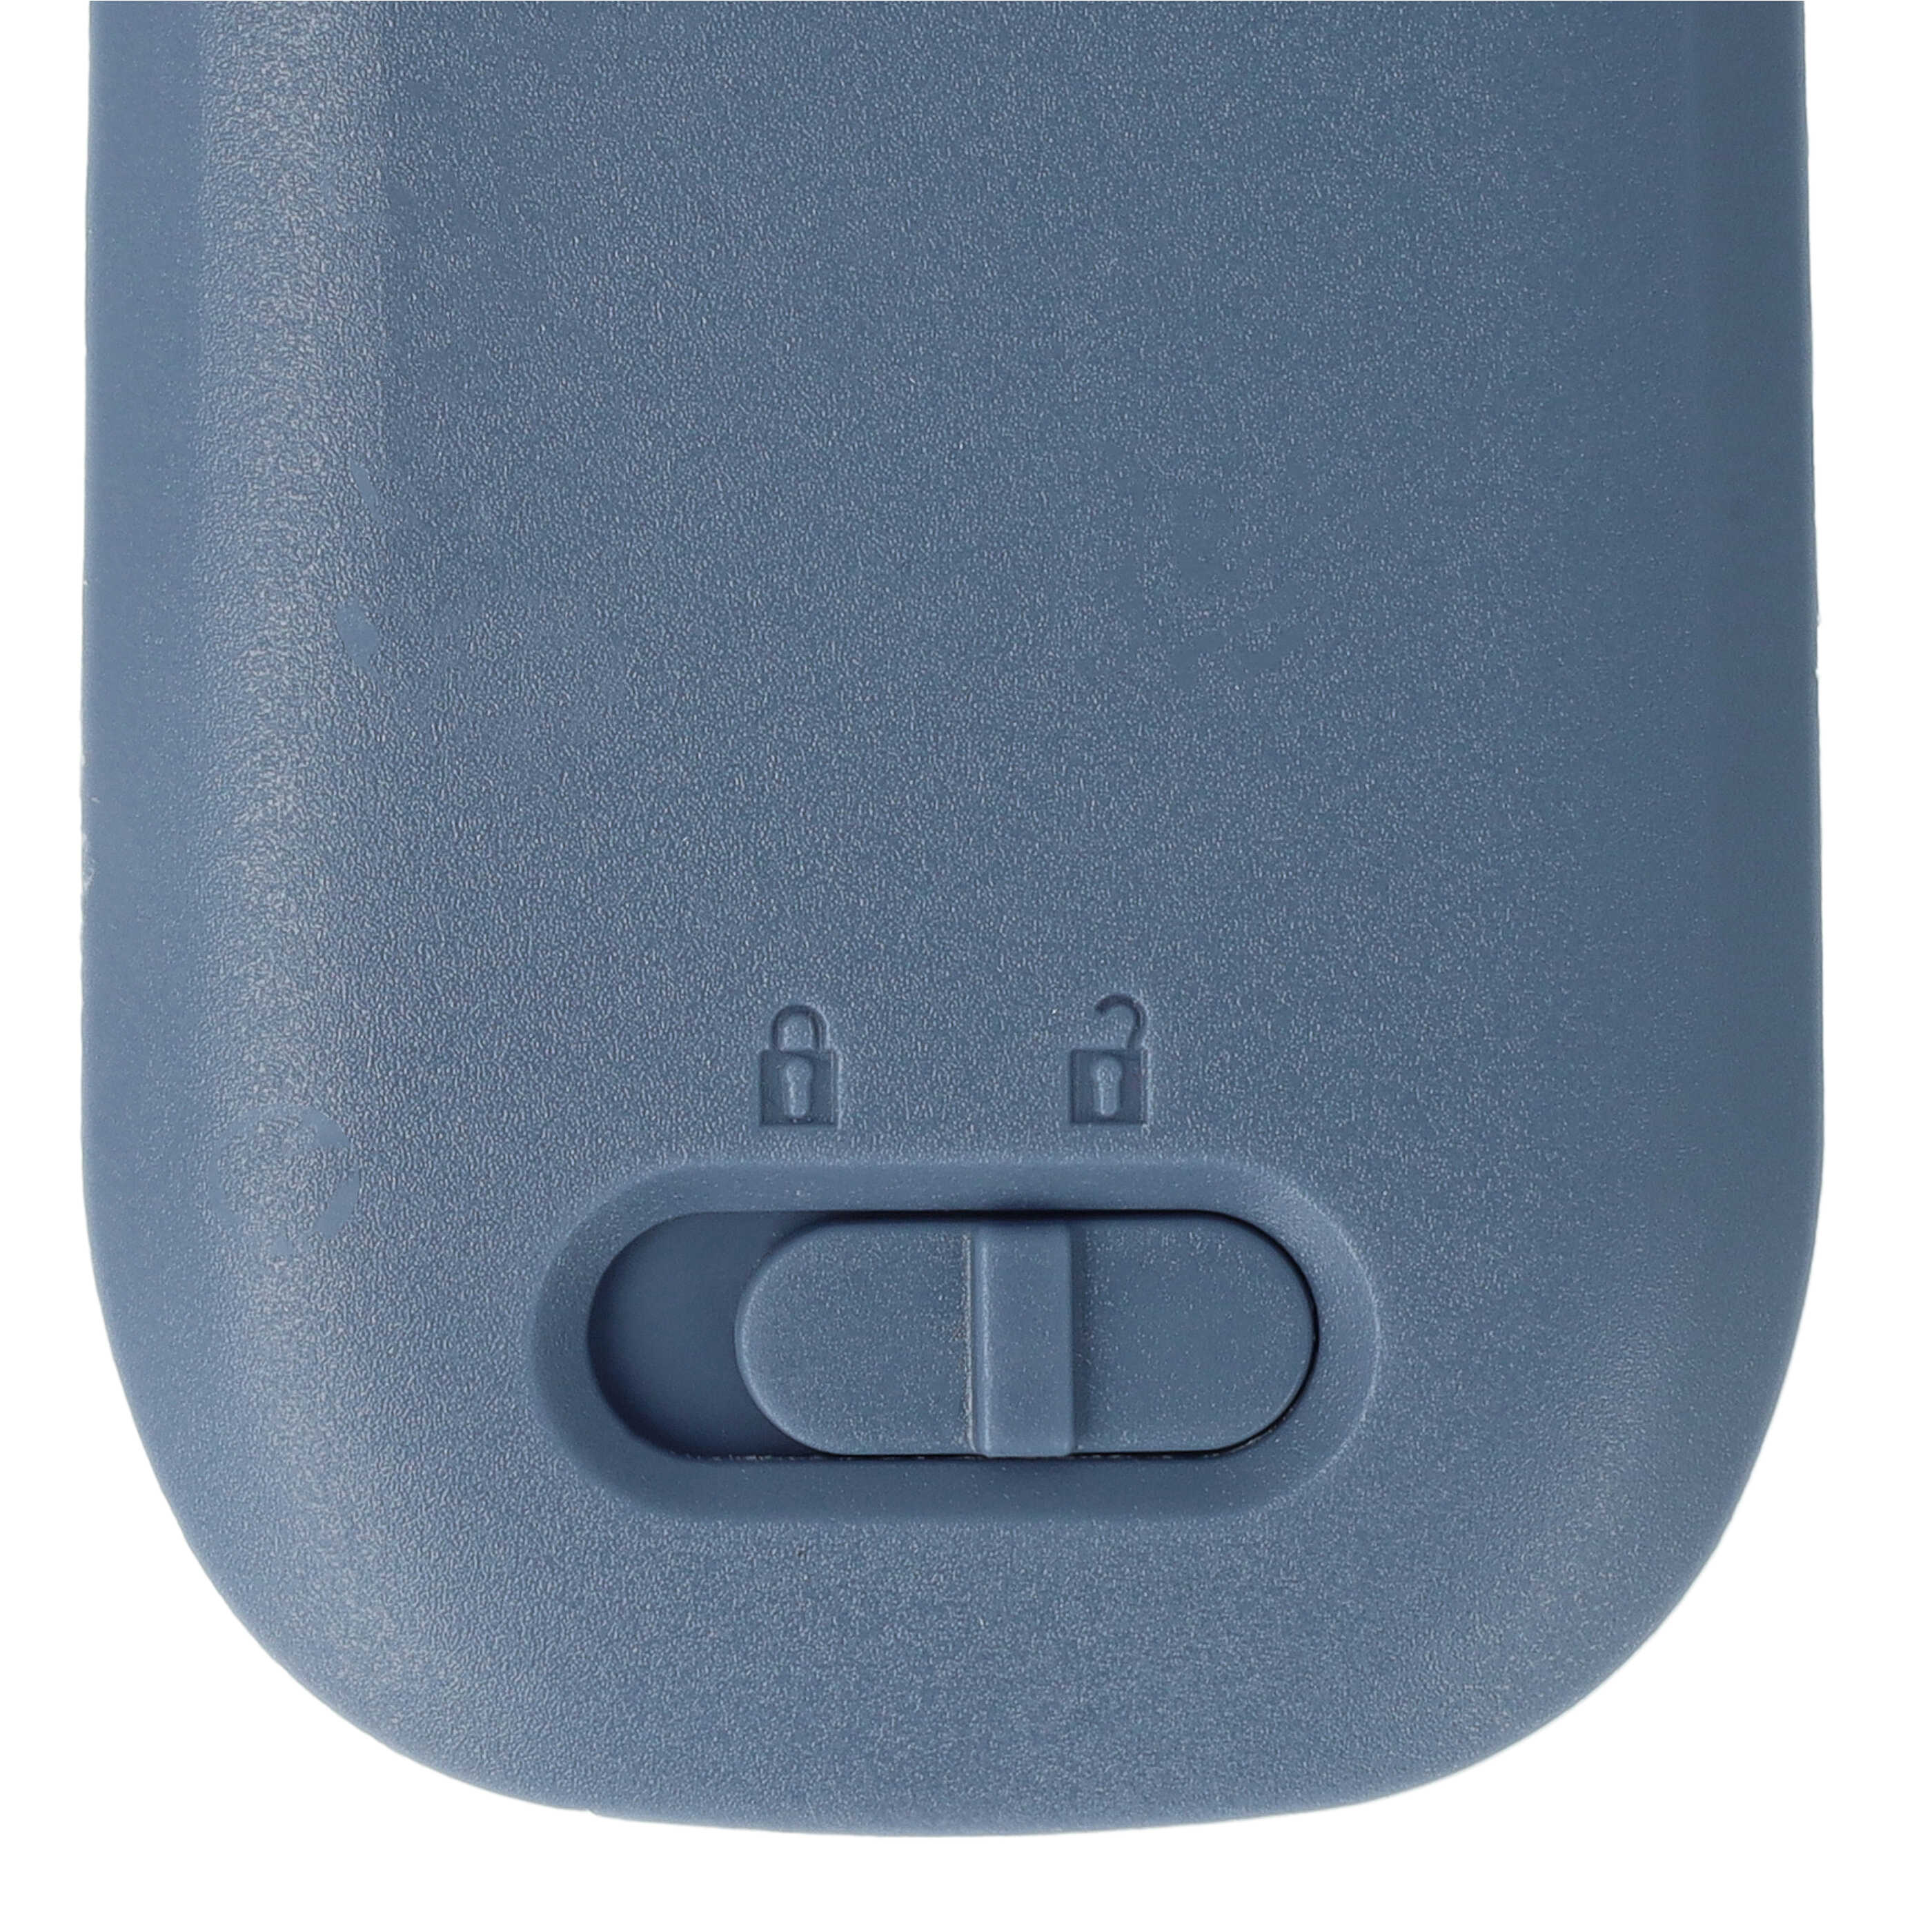 Landline Phone Battery Replacement for Alcatel 3BN78404AA, WH1-EABA/1A1, 0480468 - 900mAh 3.7V Li-Ion